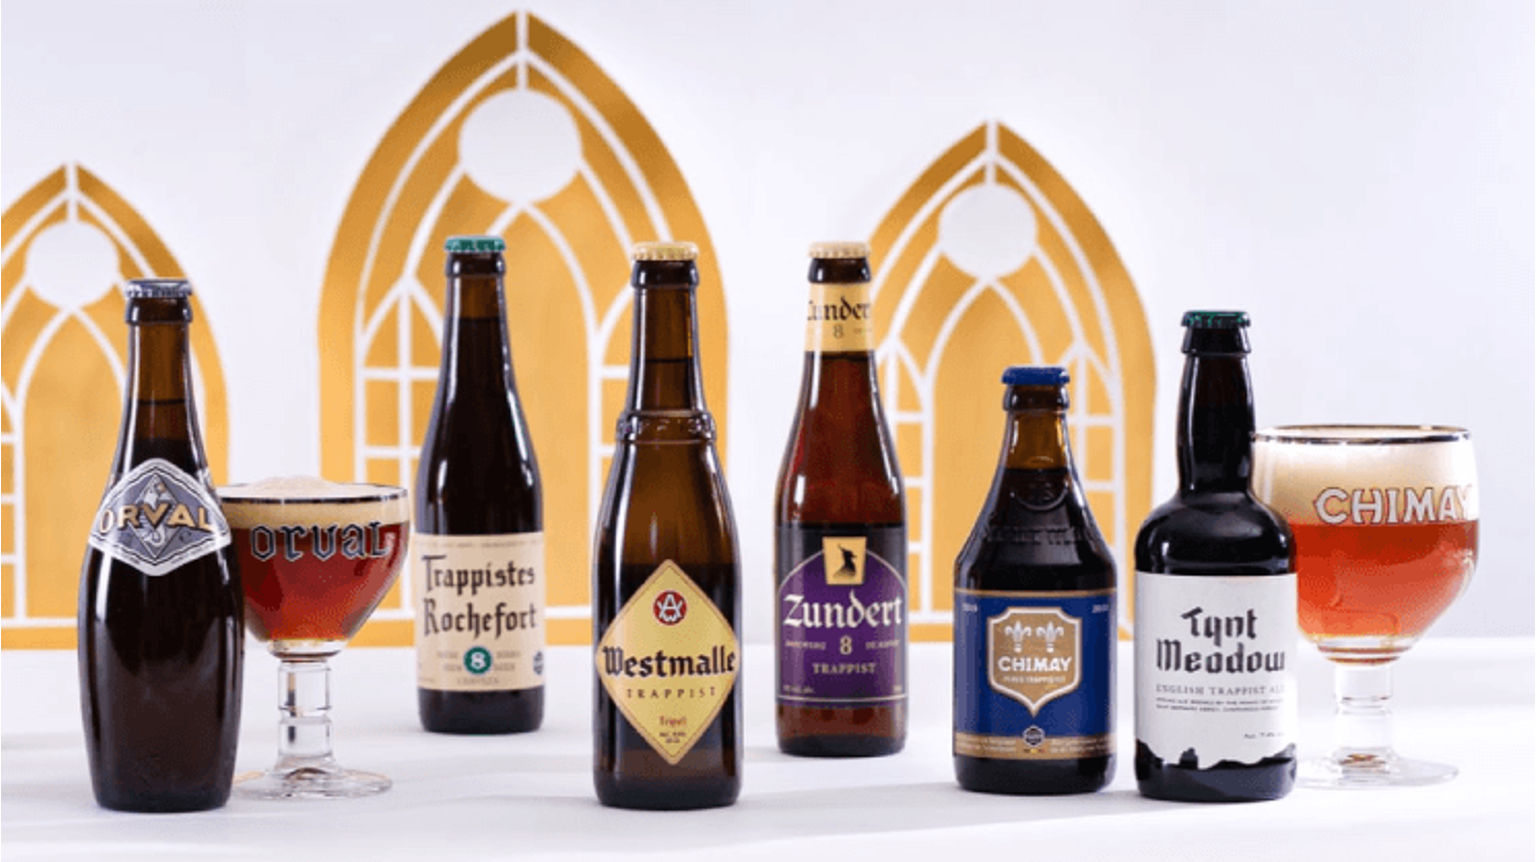 thumbnail for blog article named: Trappistenbieren: Een religieuze ervaring in Craft Beer